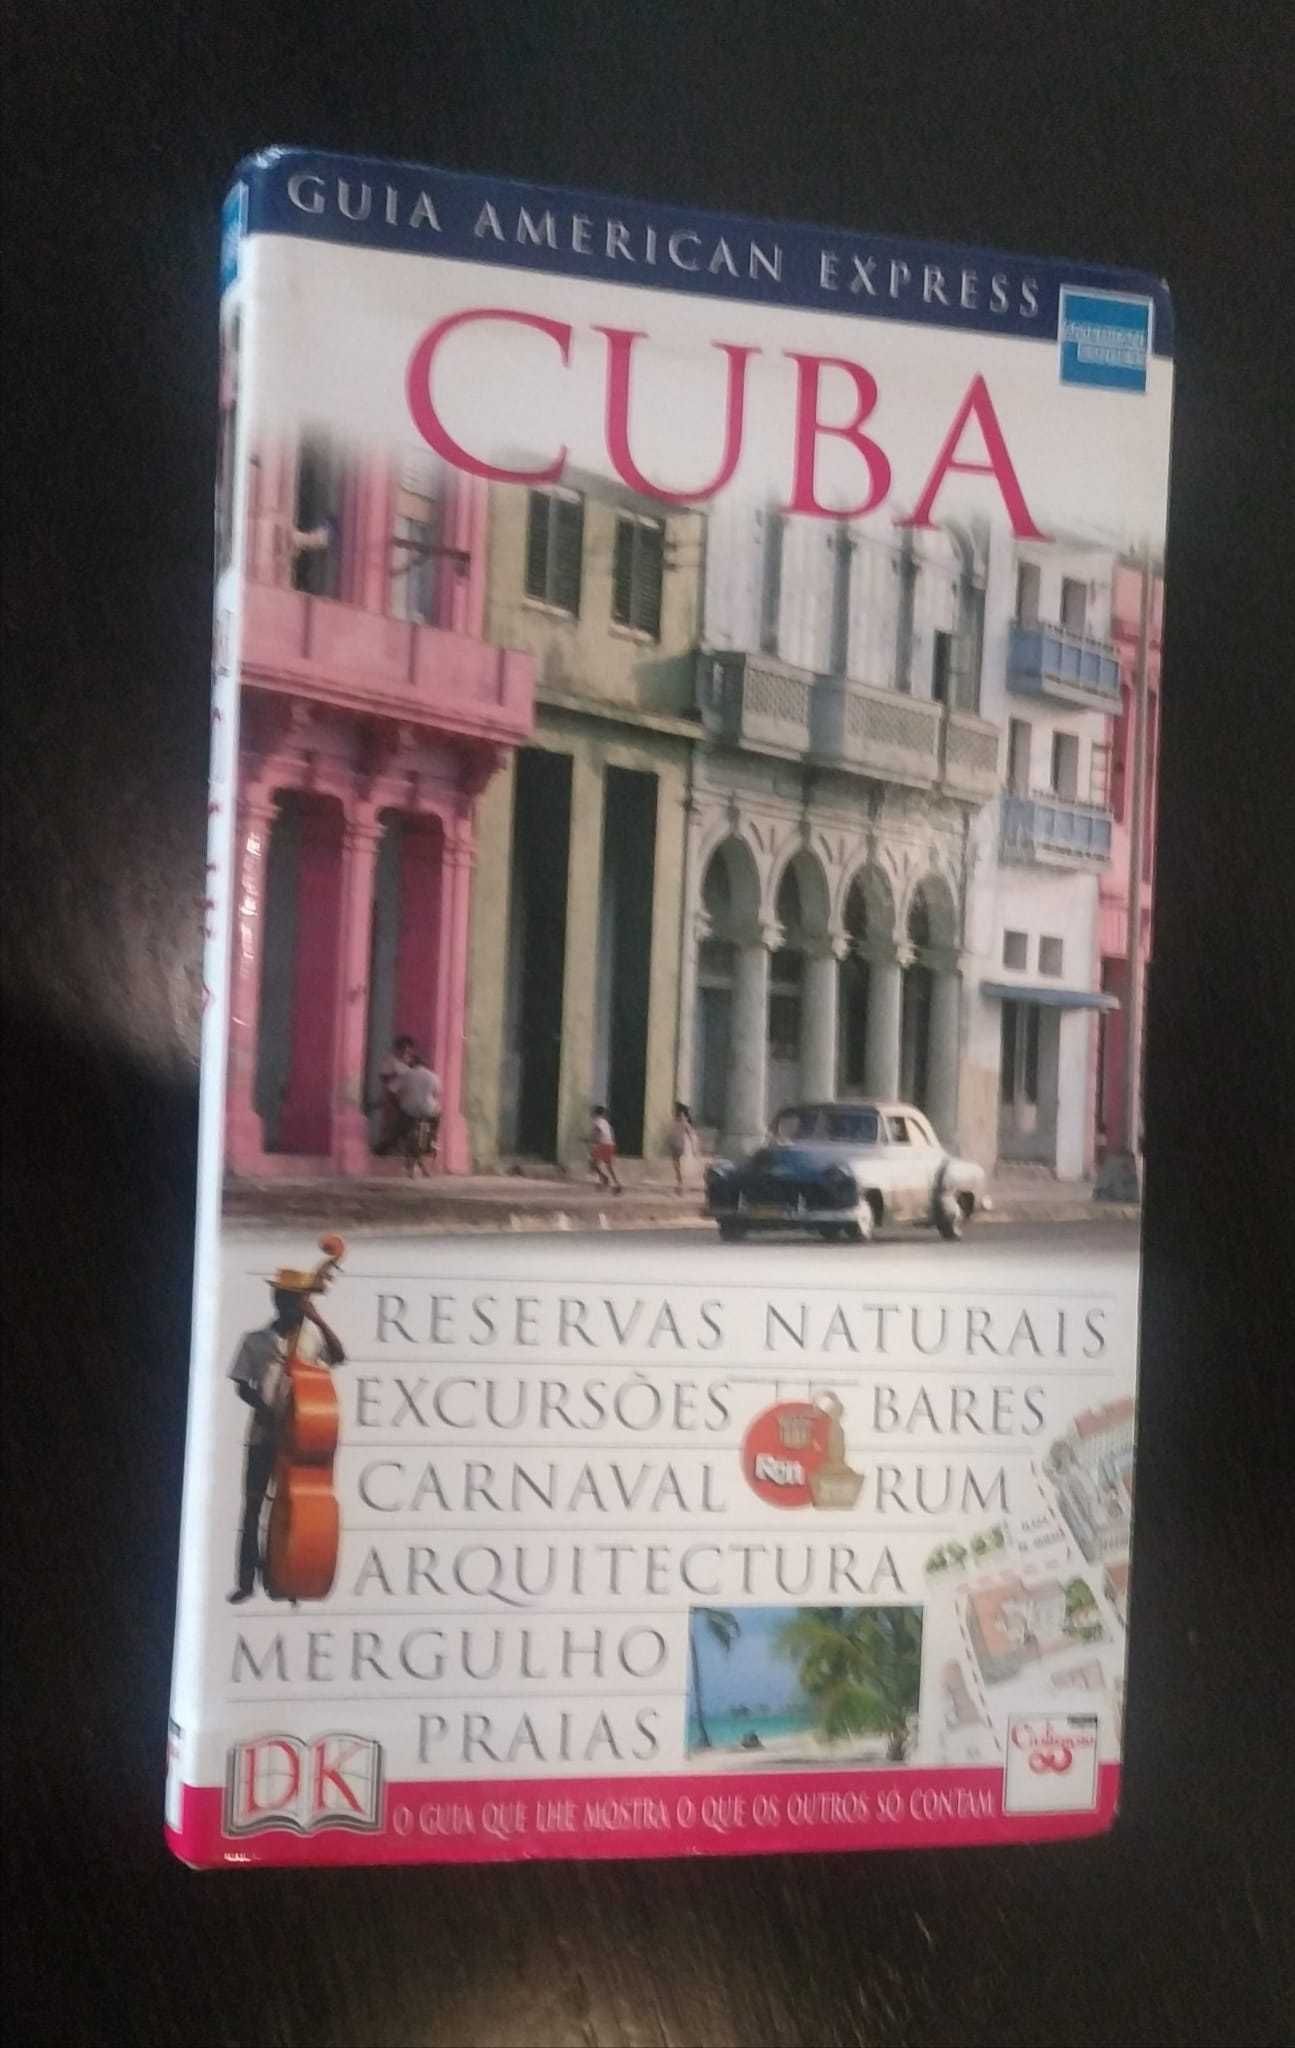 Guia American Express - Cuba